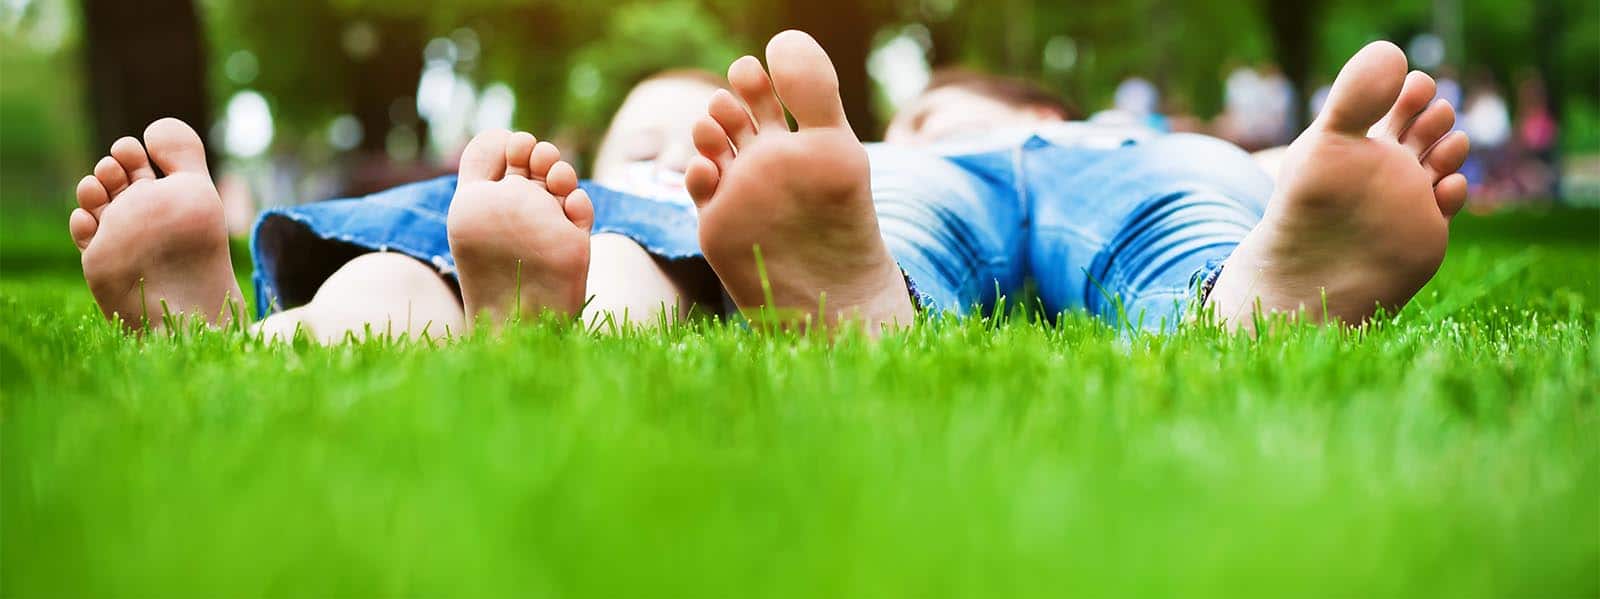 feet on grass. Family picnic in spring park